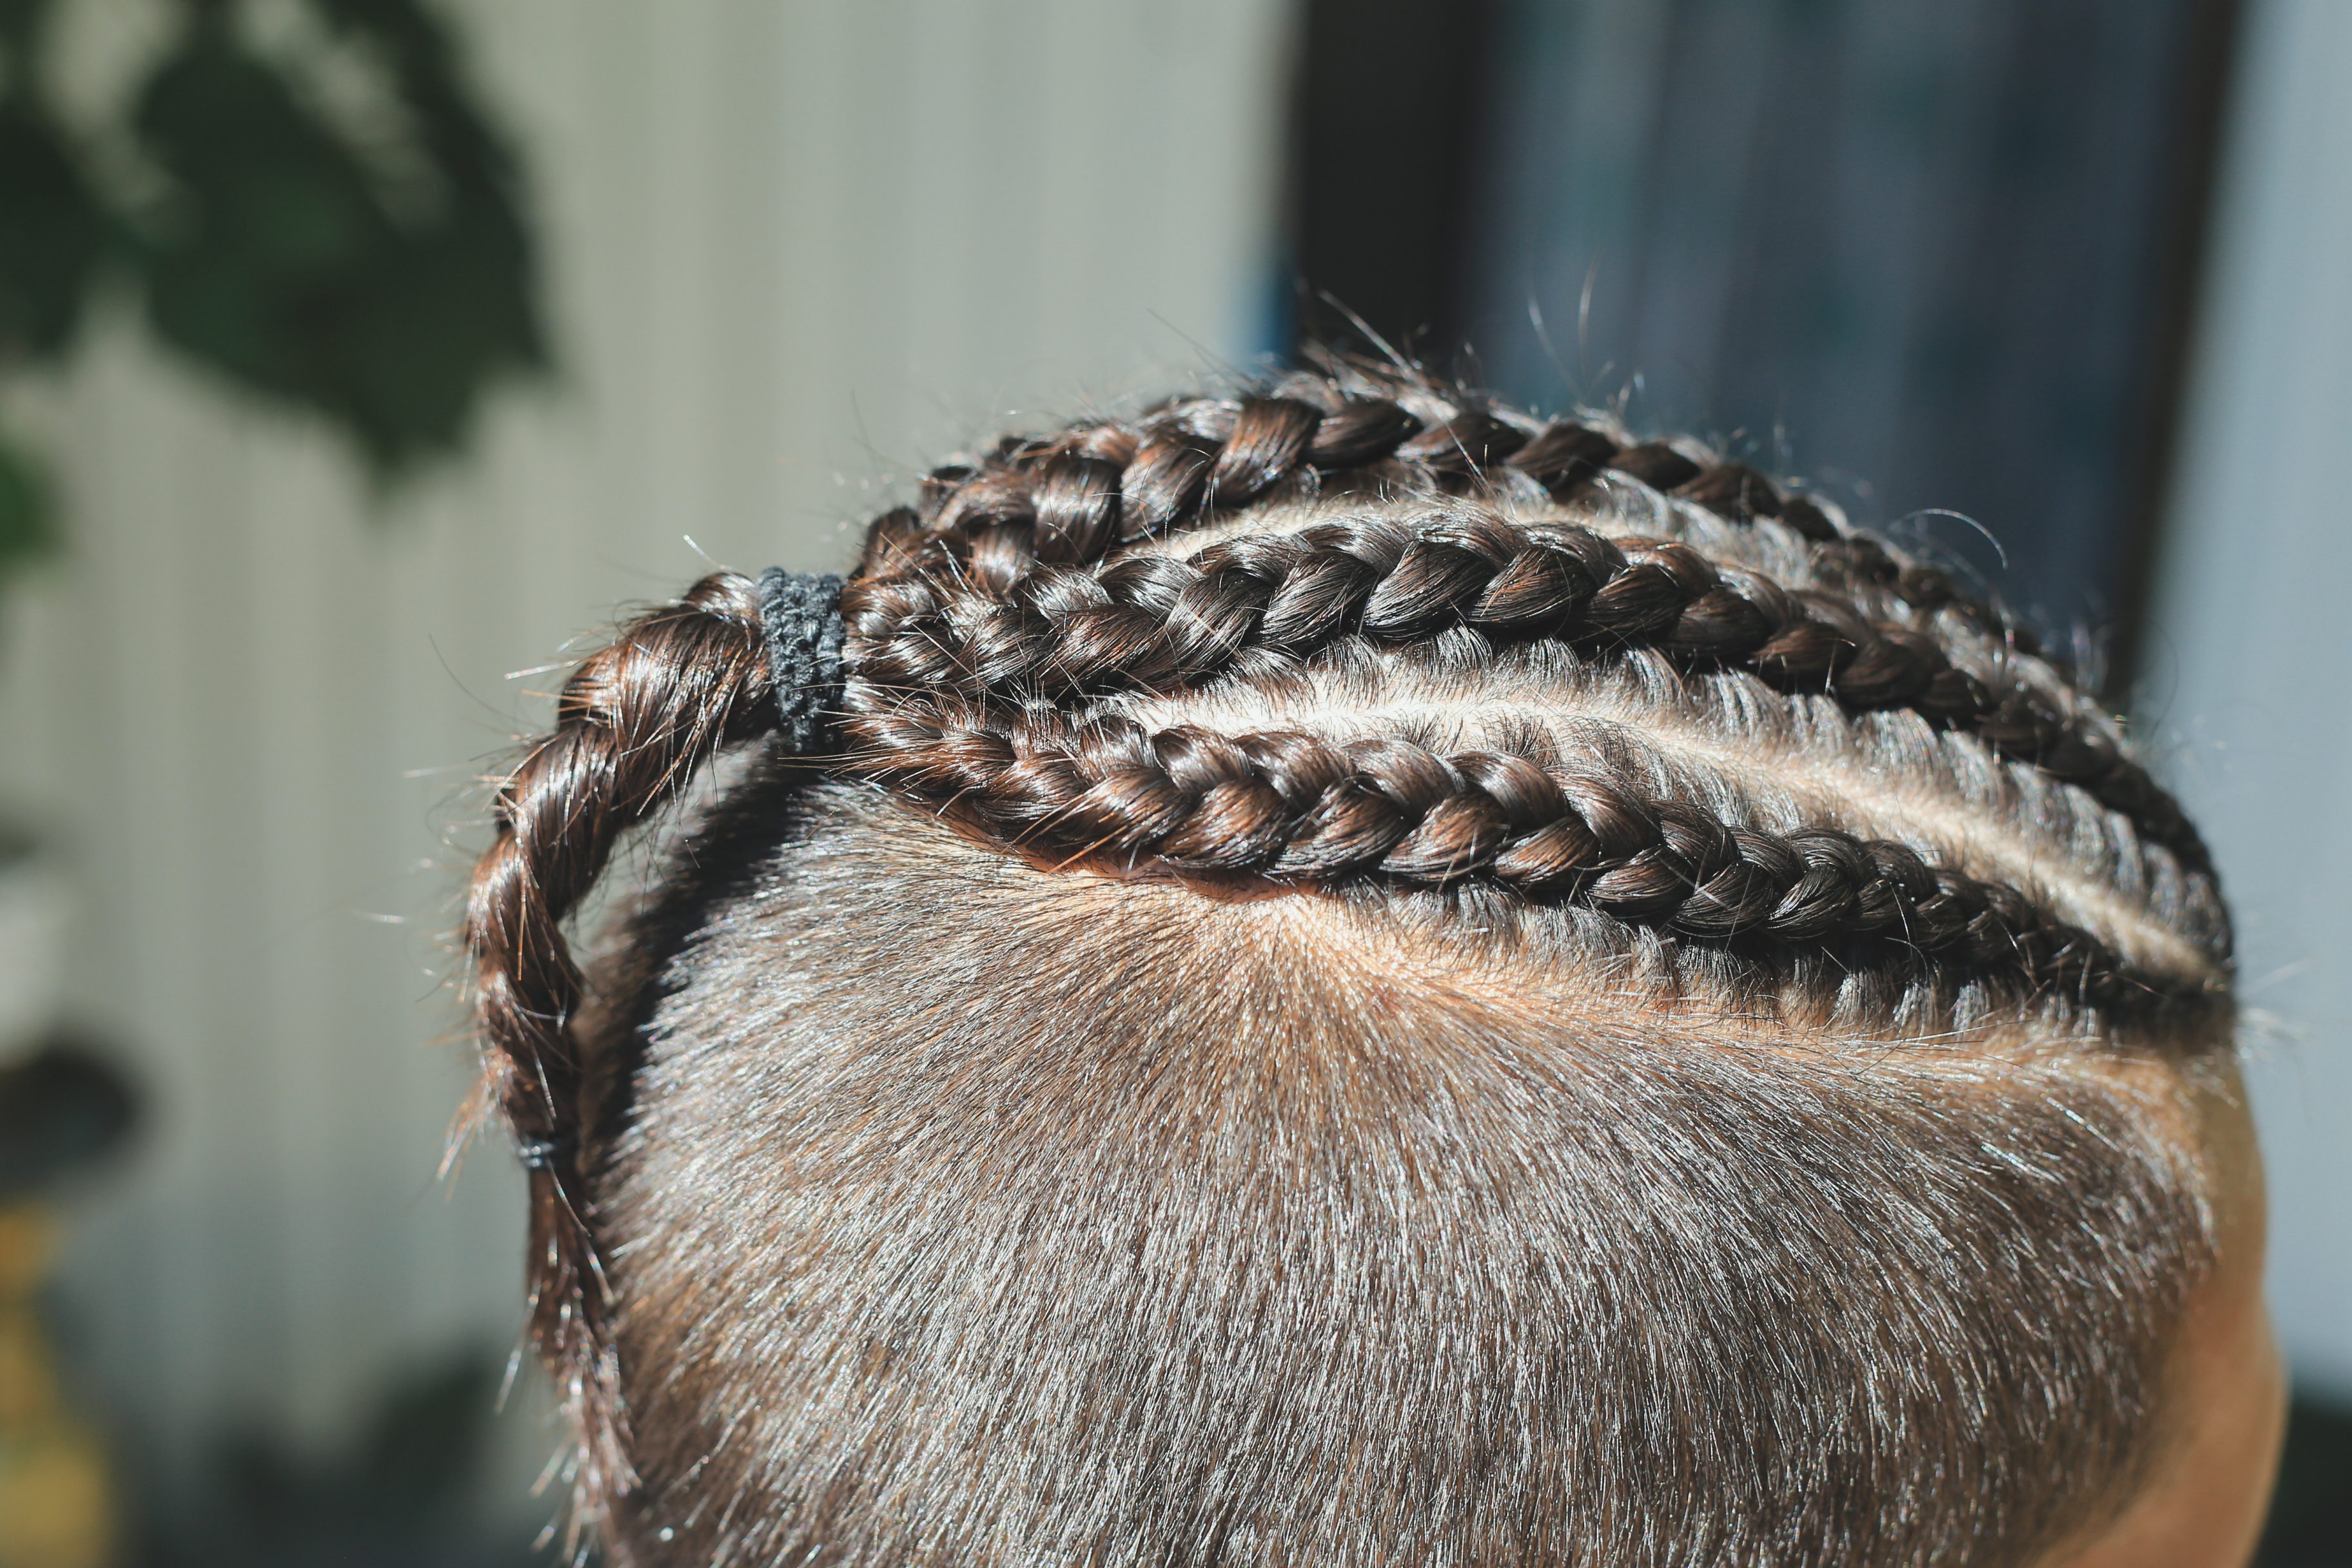 Three cornrow braids